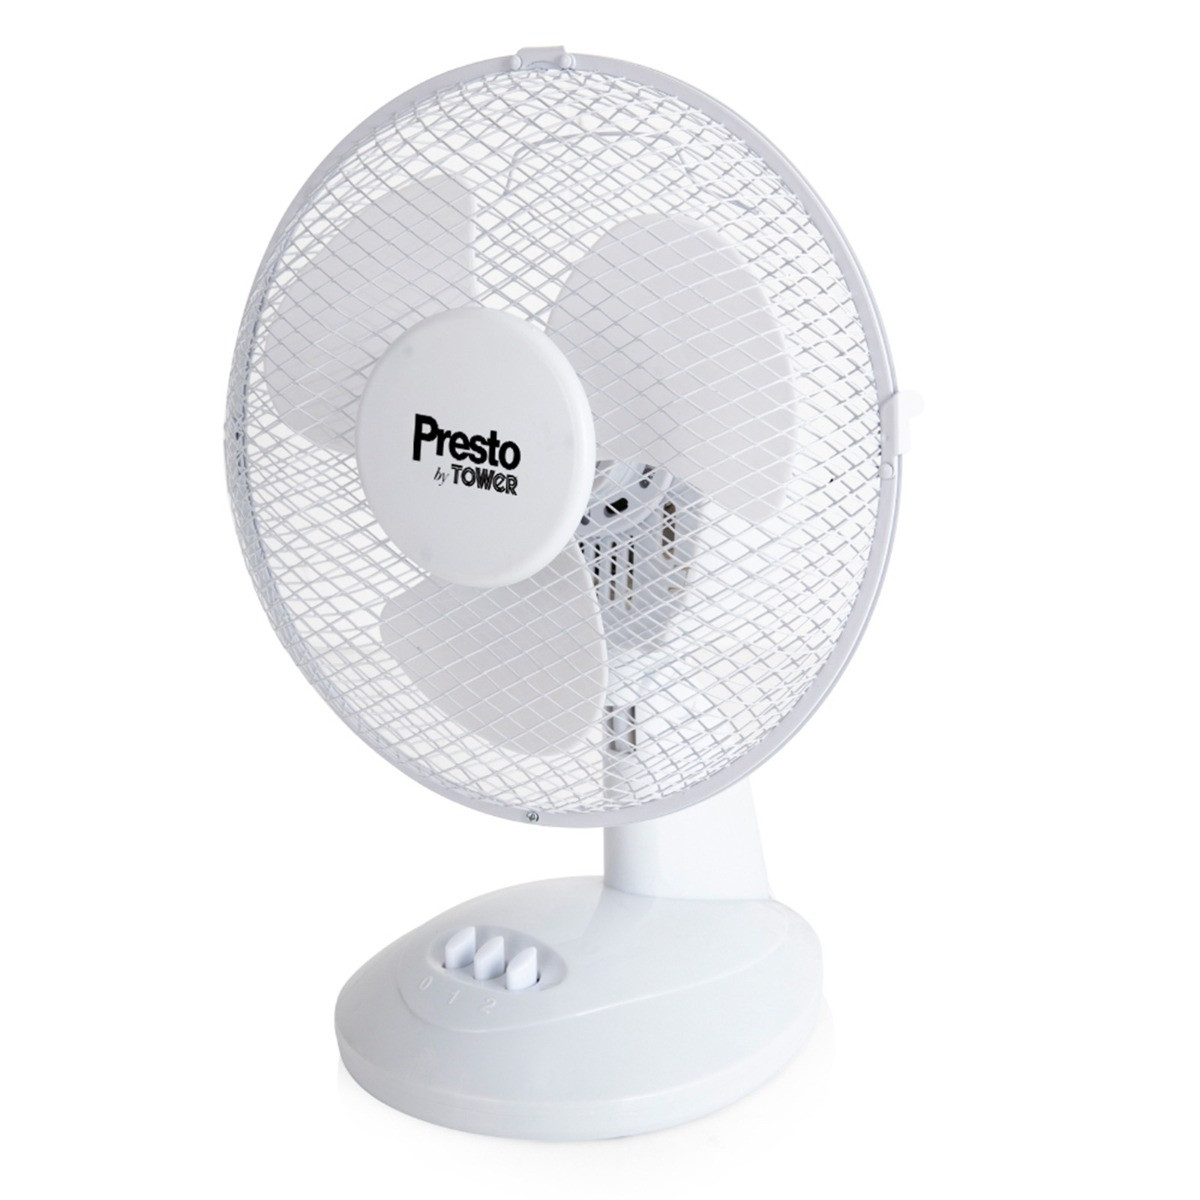 Tower Presto Free Standing Cooling Desk Fan, White - 9">